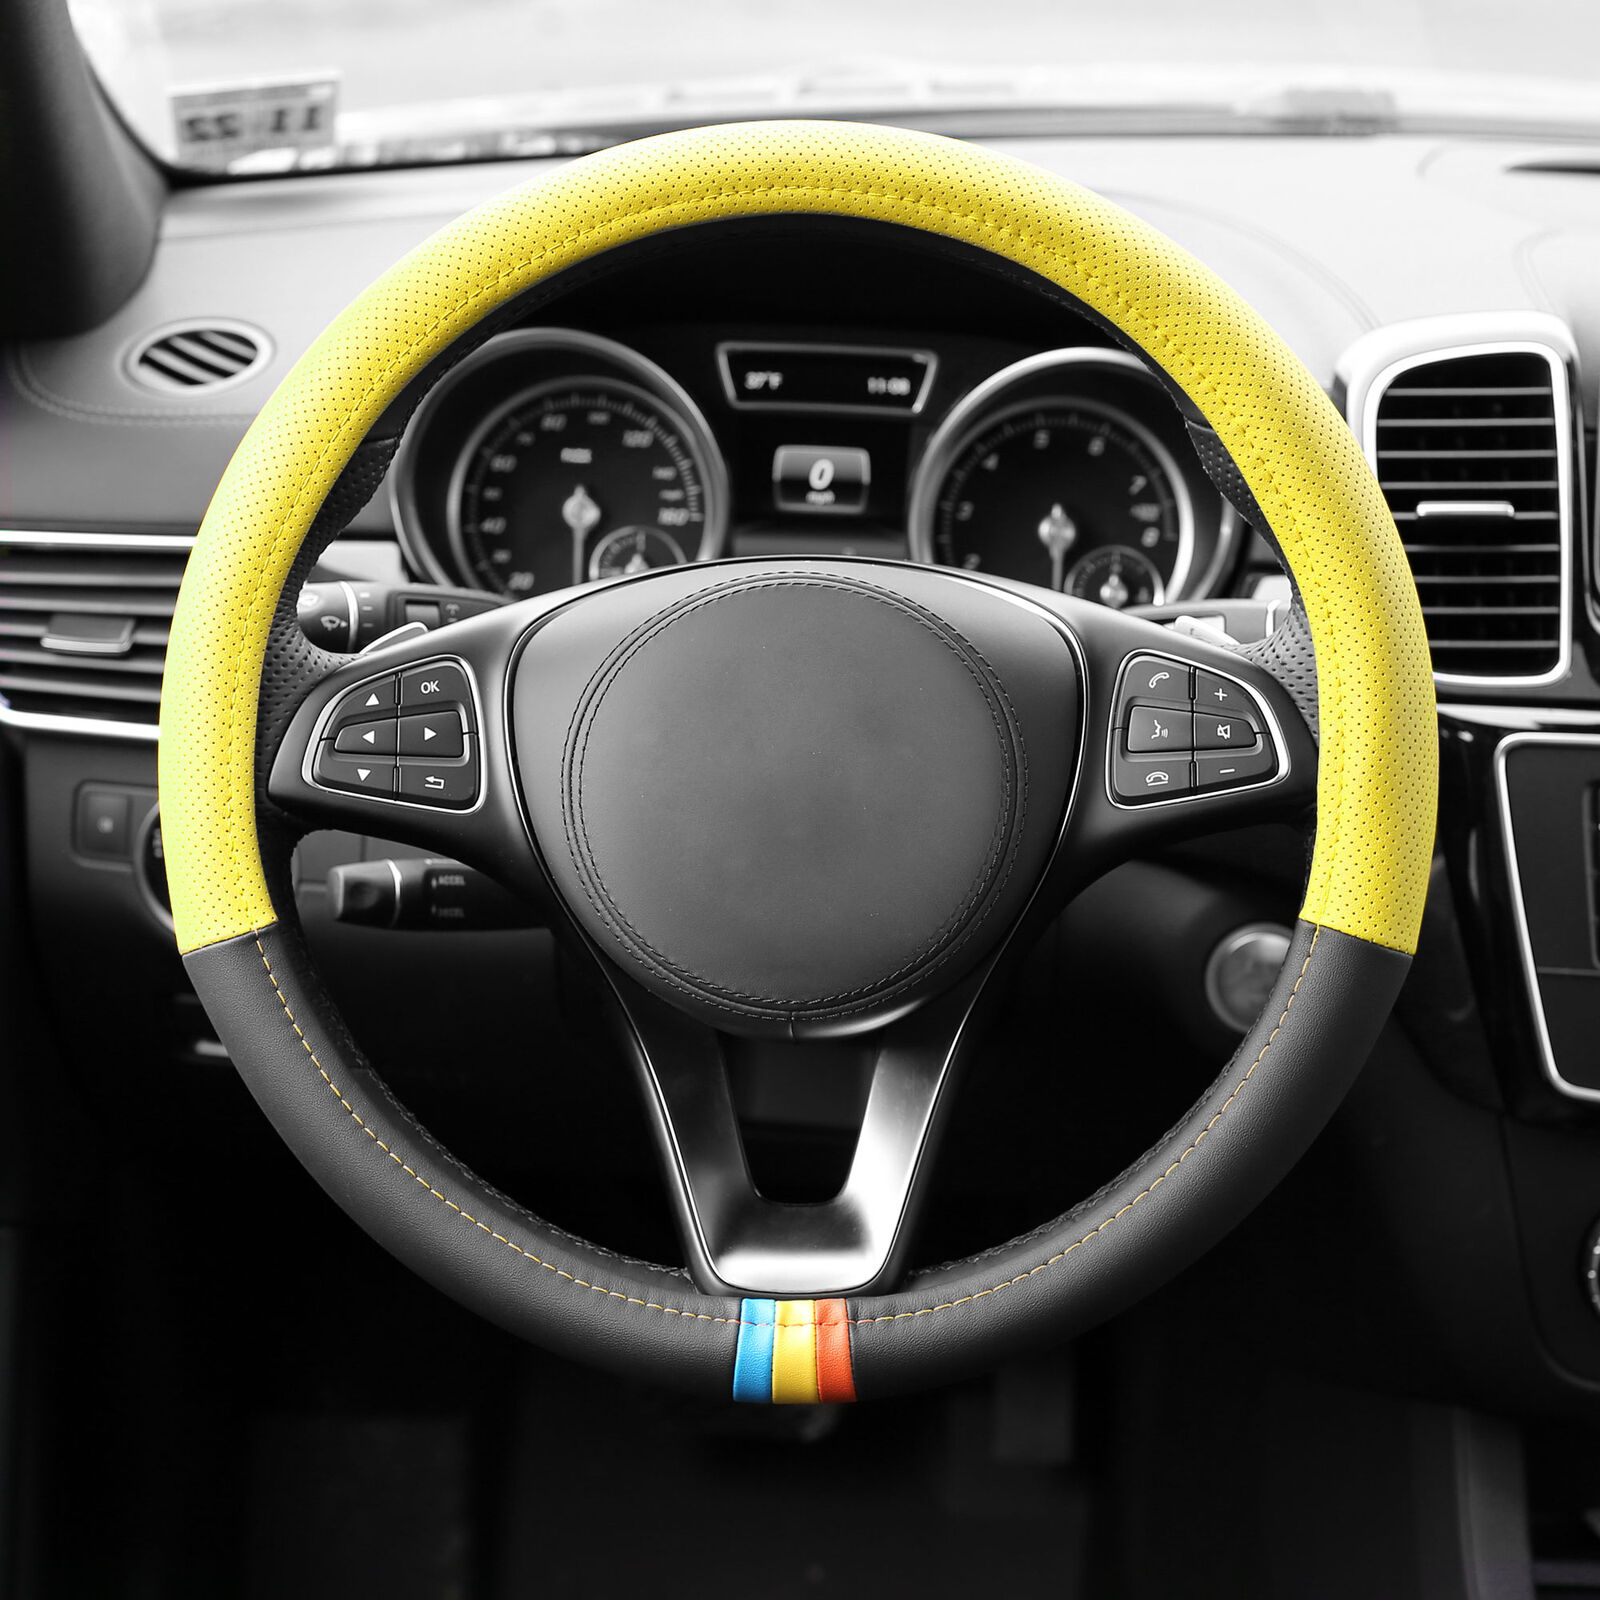 Universal Spectrum Microfiber Leather Steering Wheel Cover for Cars Trucks SUVs